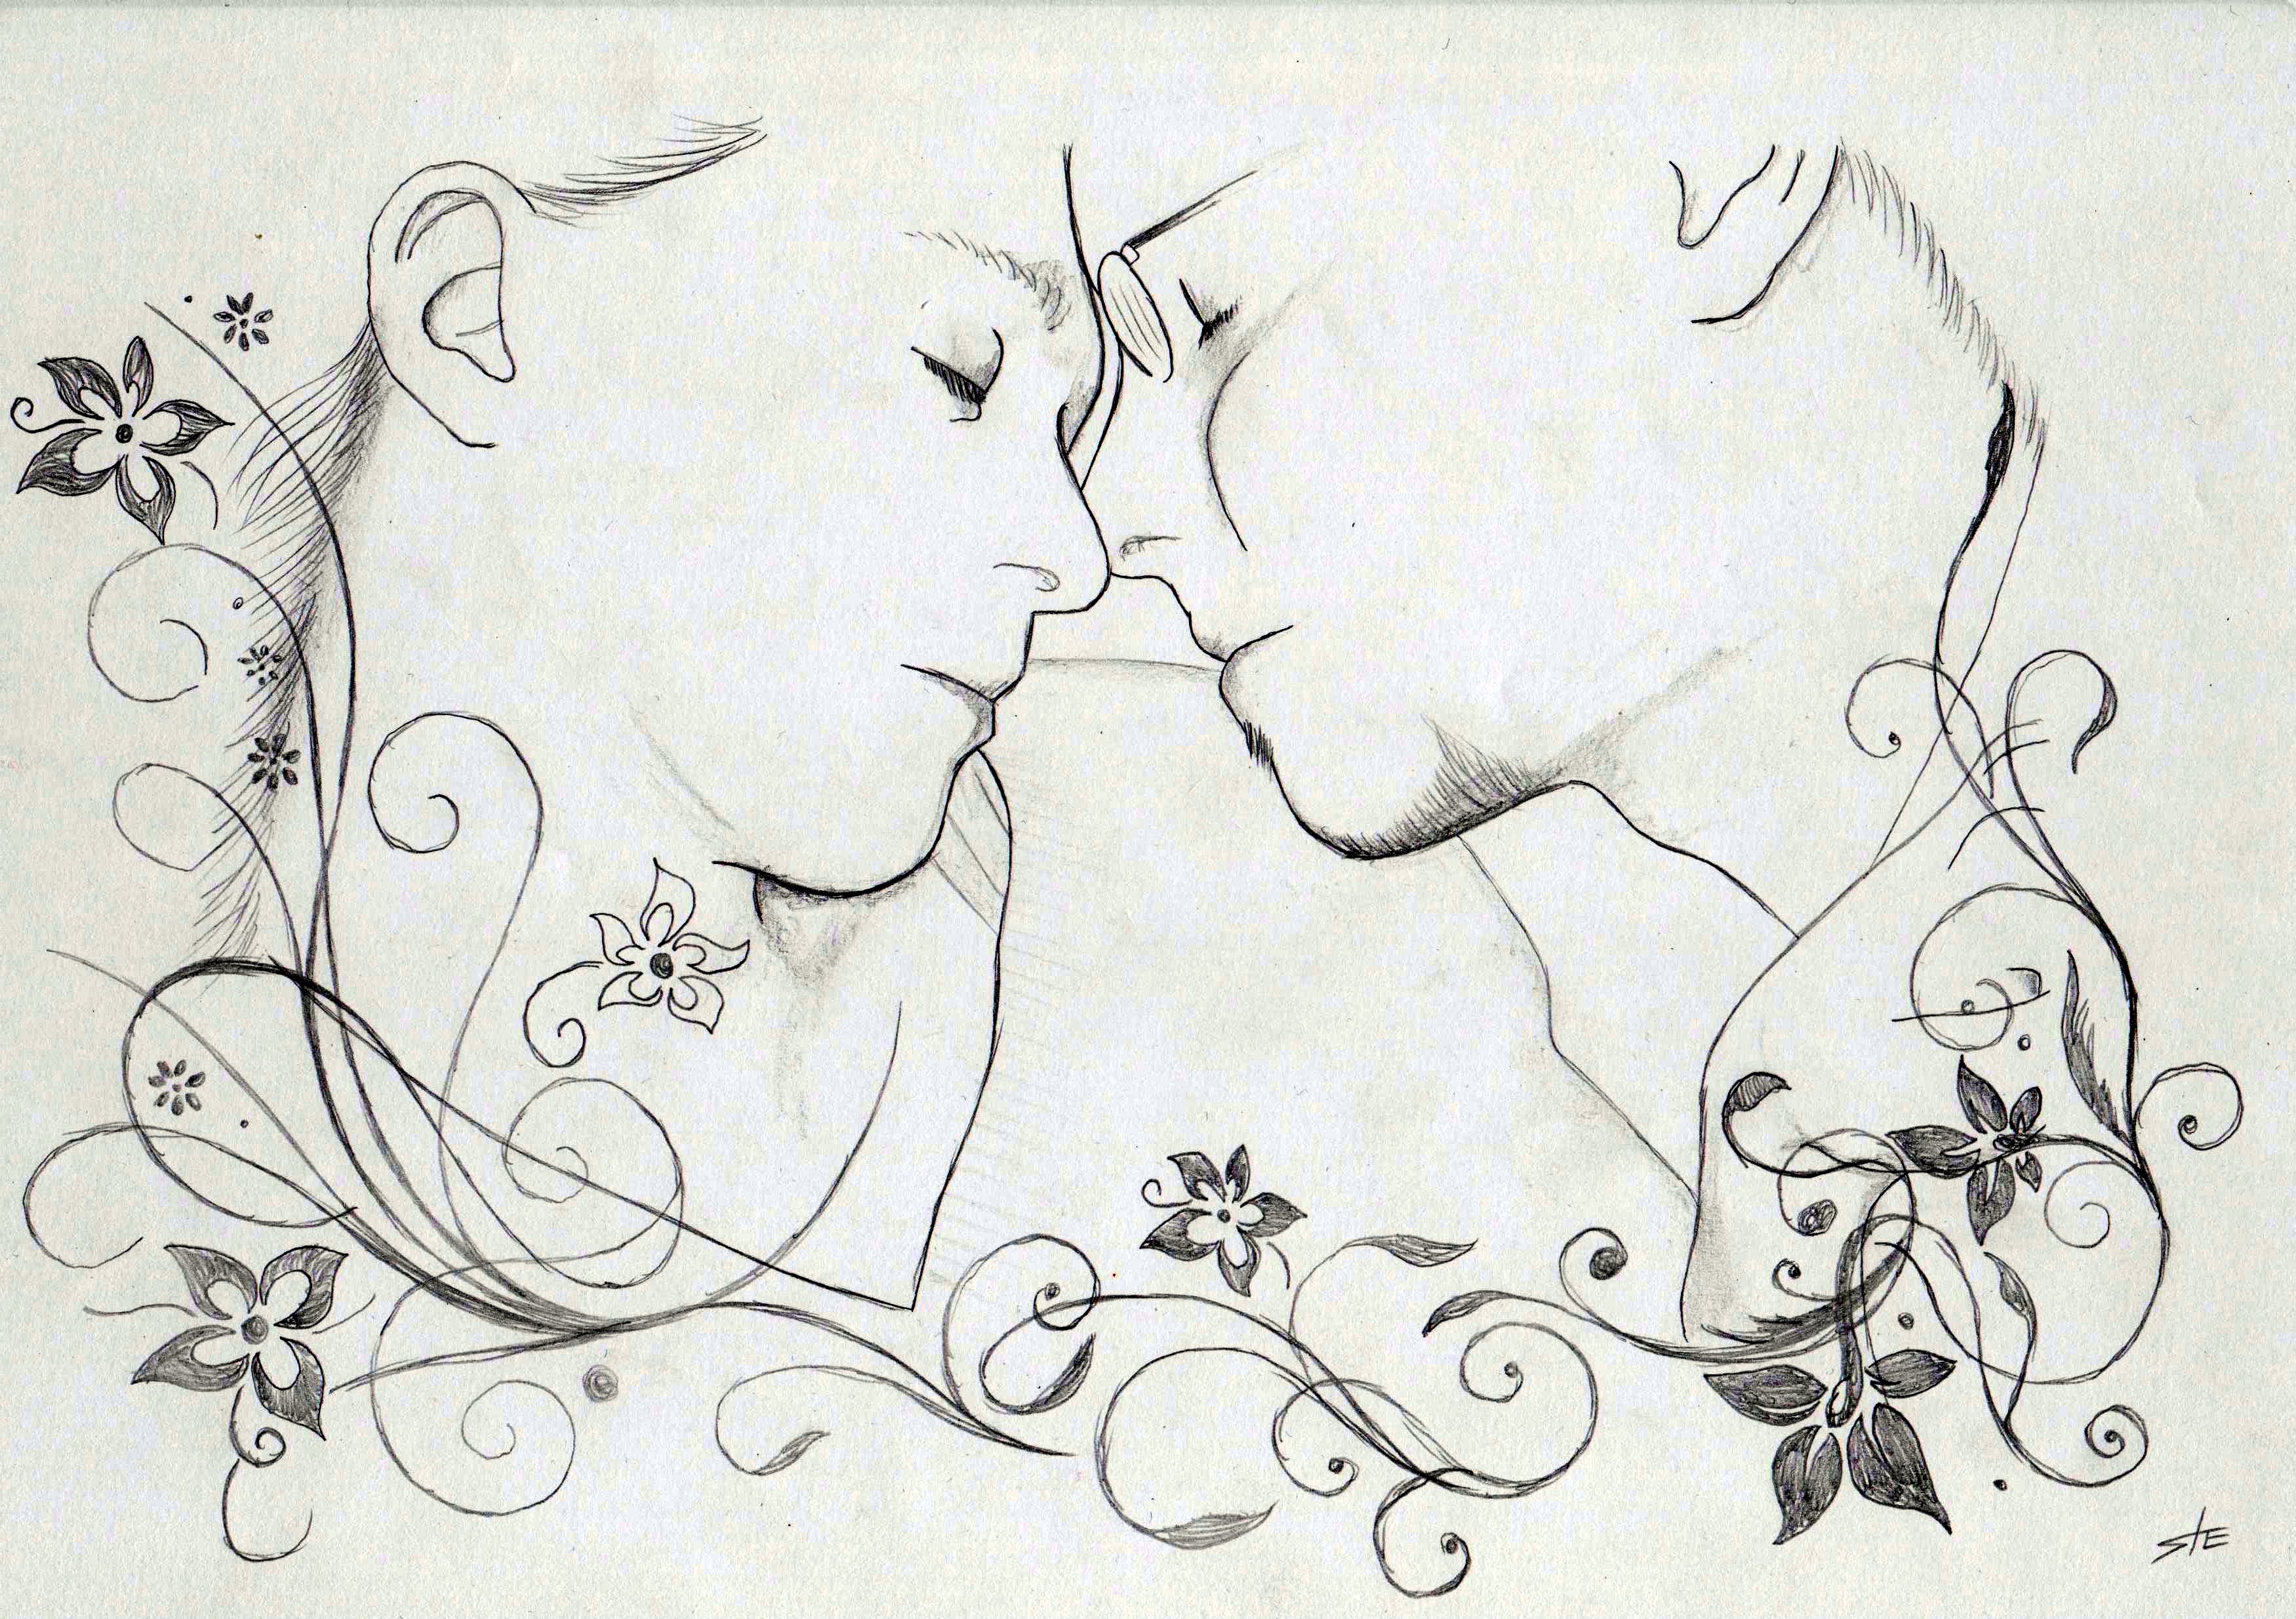 Sad Love Drawings (5) - Pleasantwalls.com | Find high Quality ...